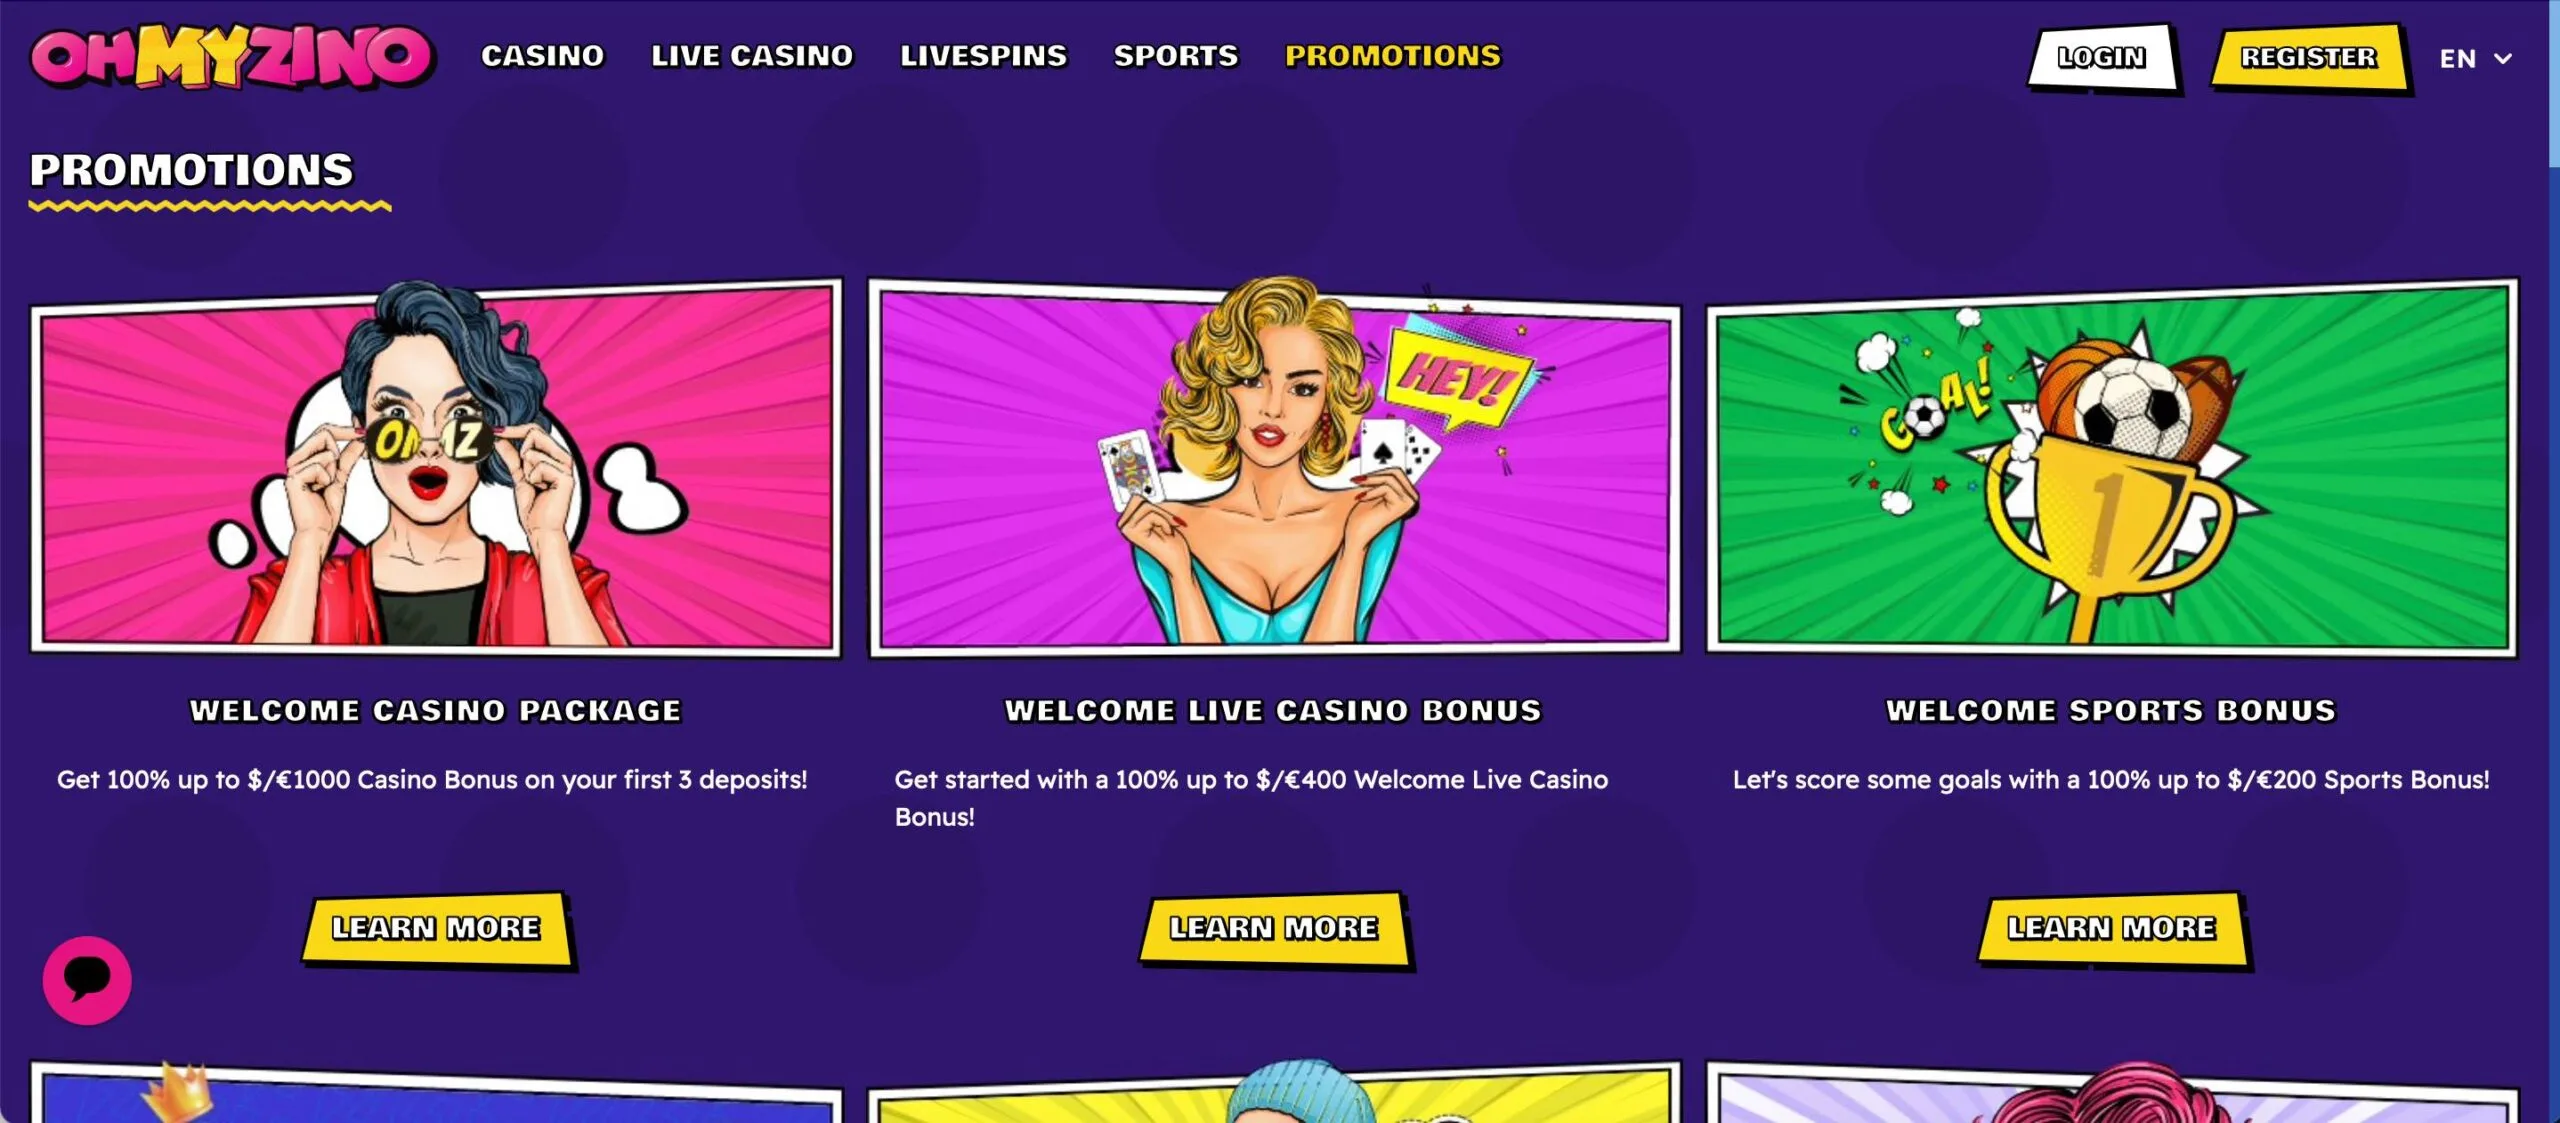 Ohmyzino Casino Bonuses